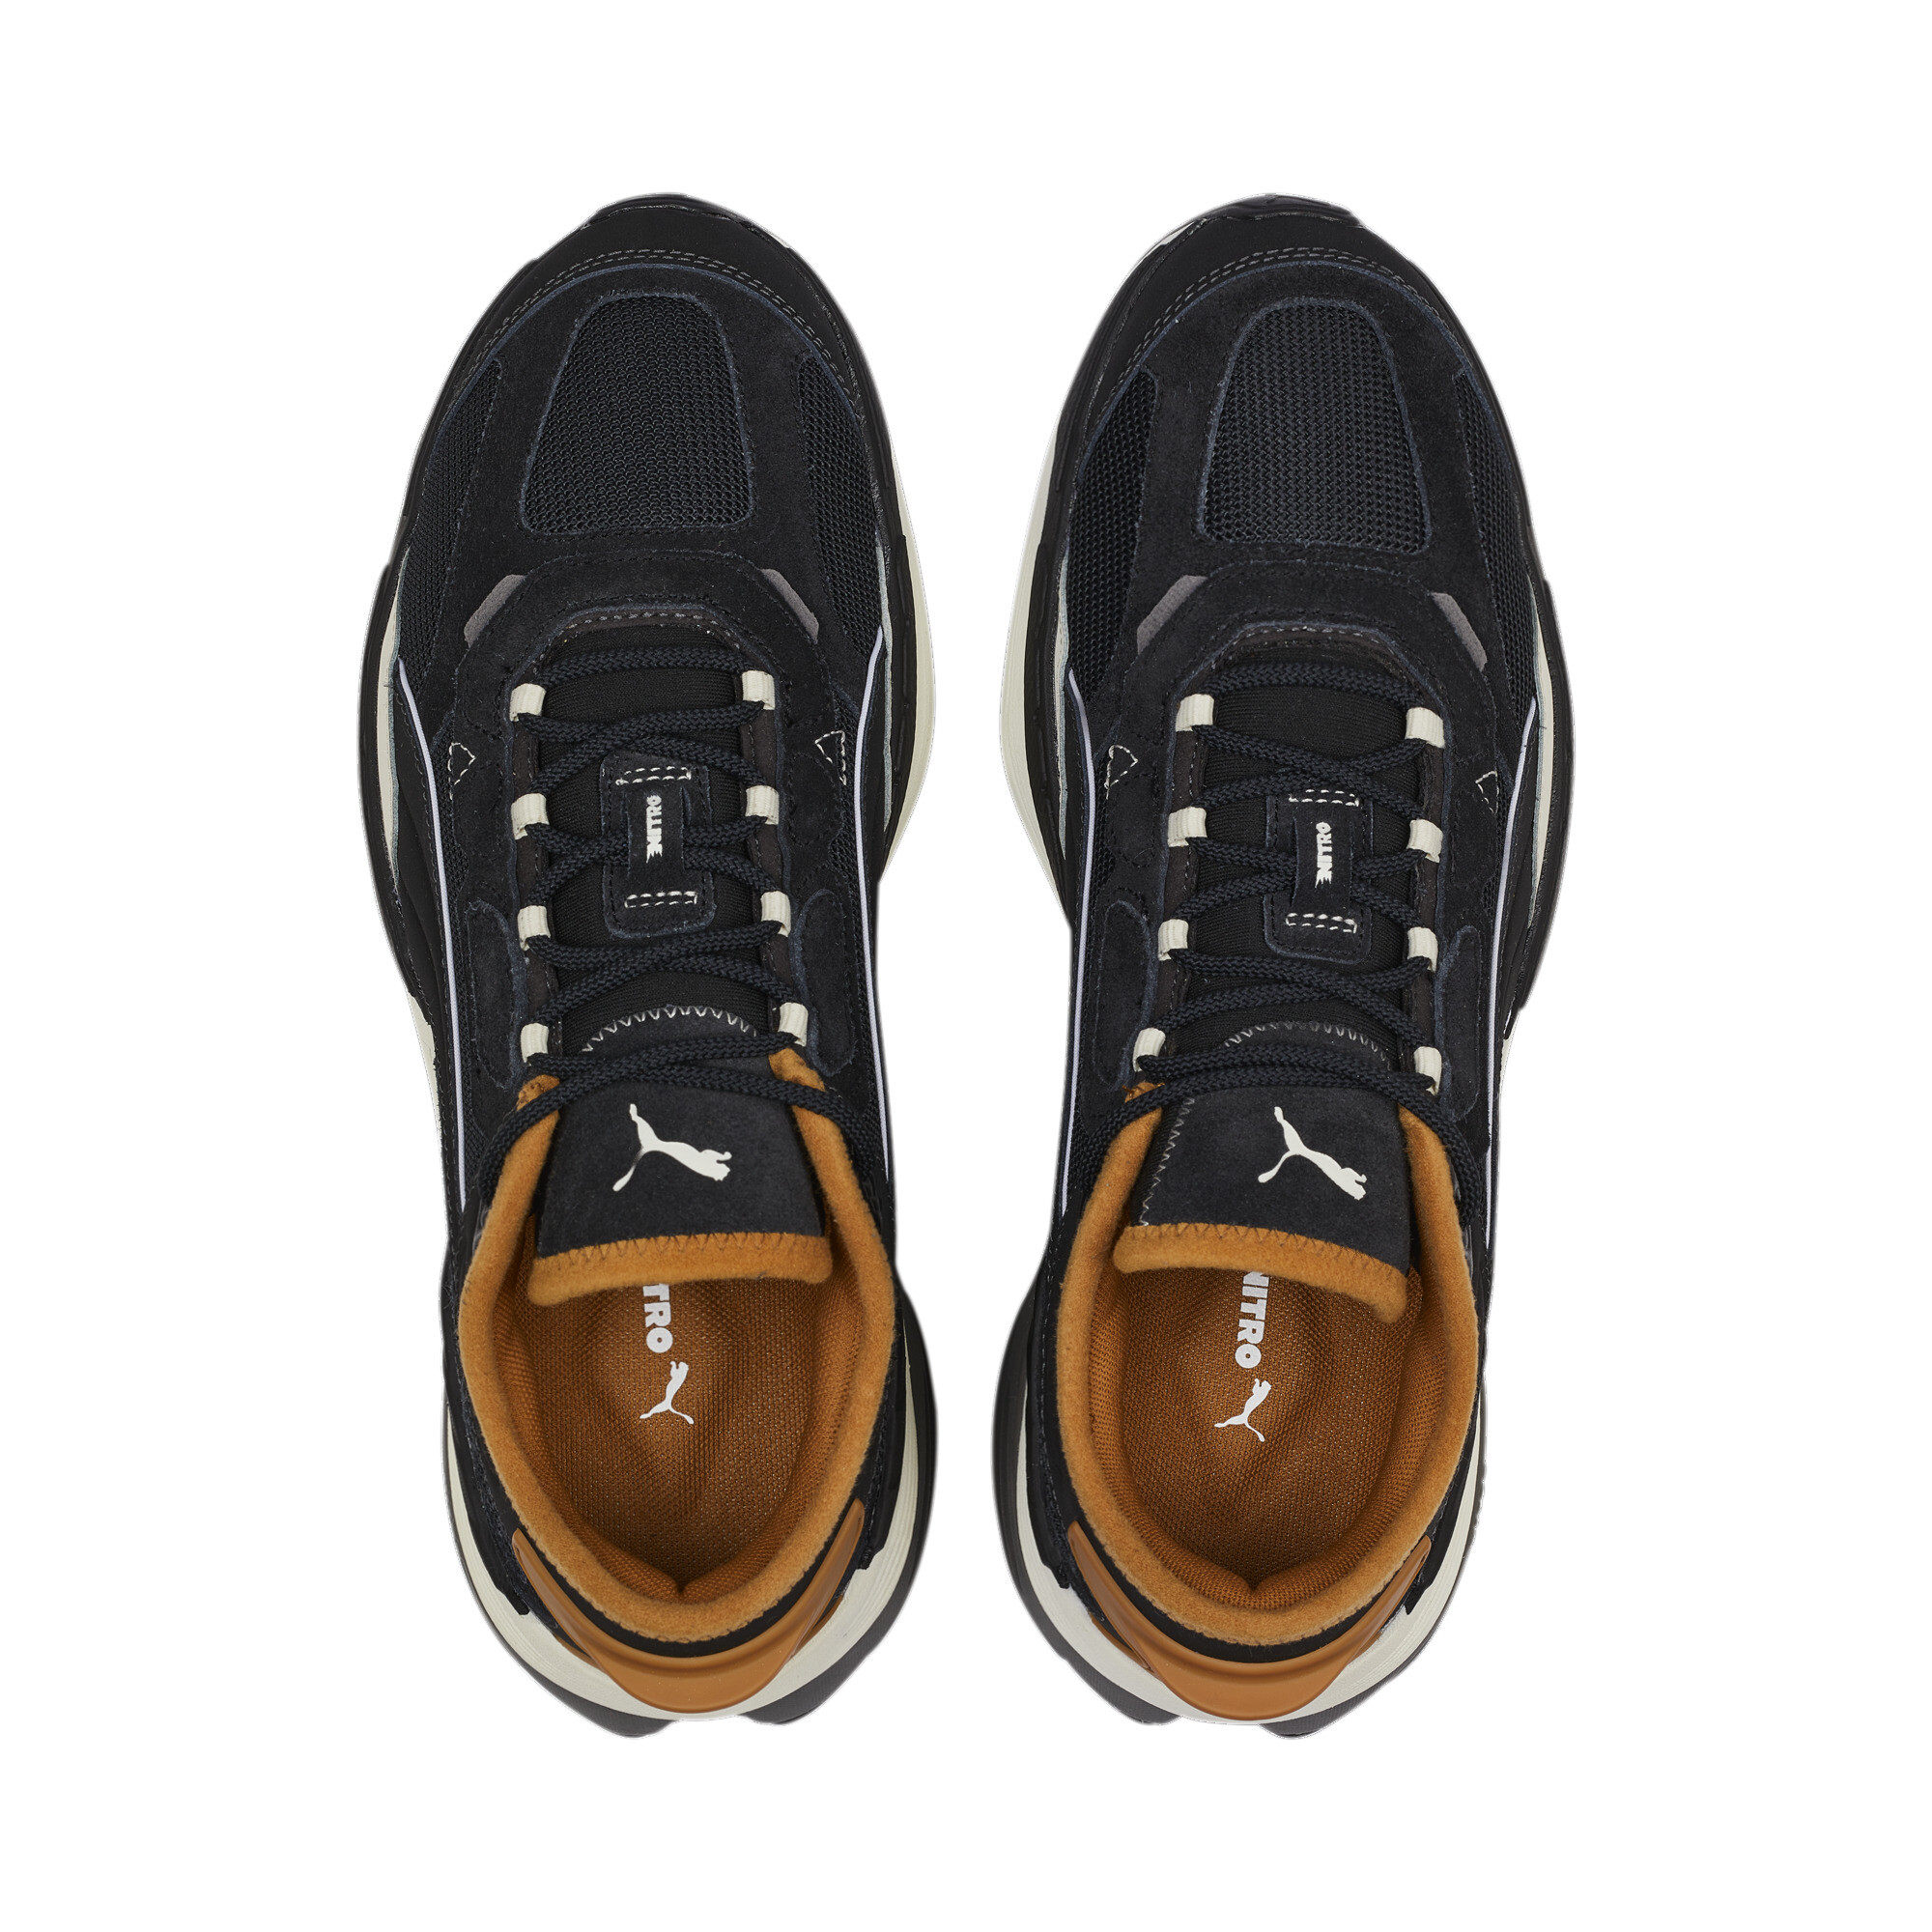 Men's PUMA Extent Nitro Heritage Sneakers In Black, Size EU 44